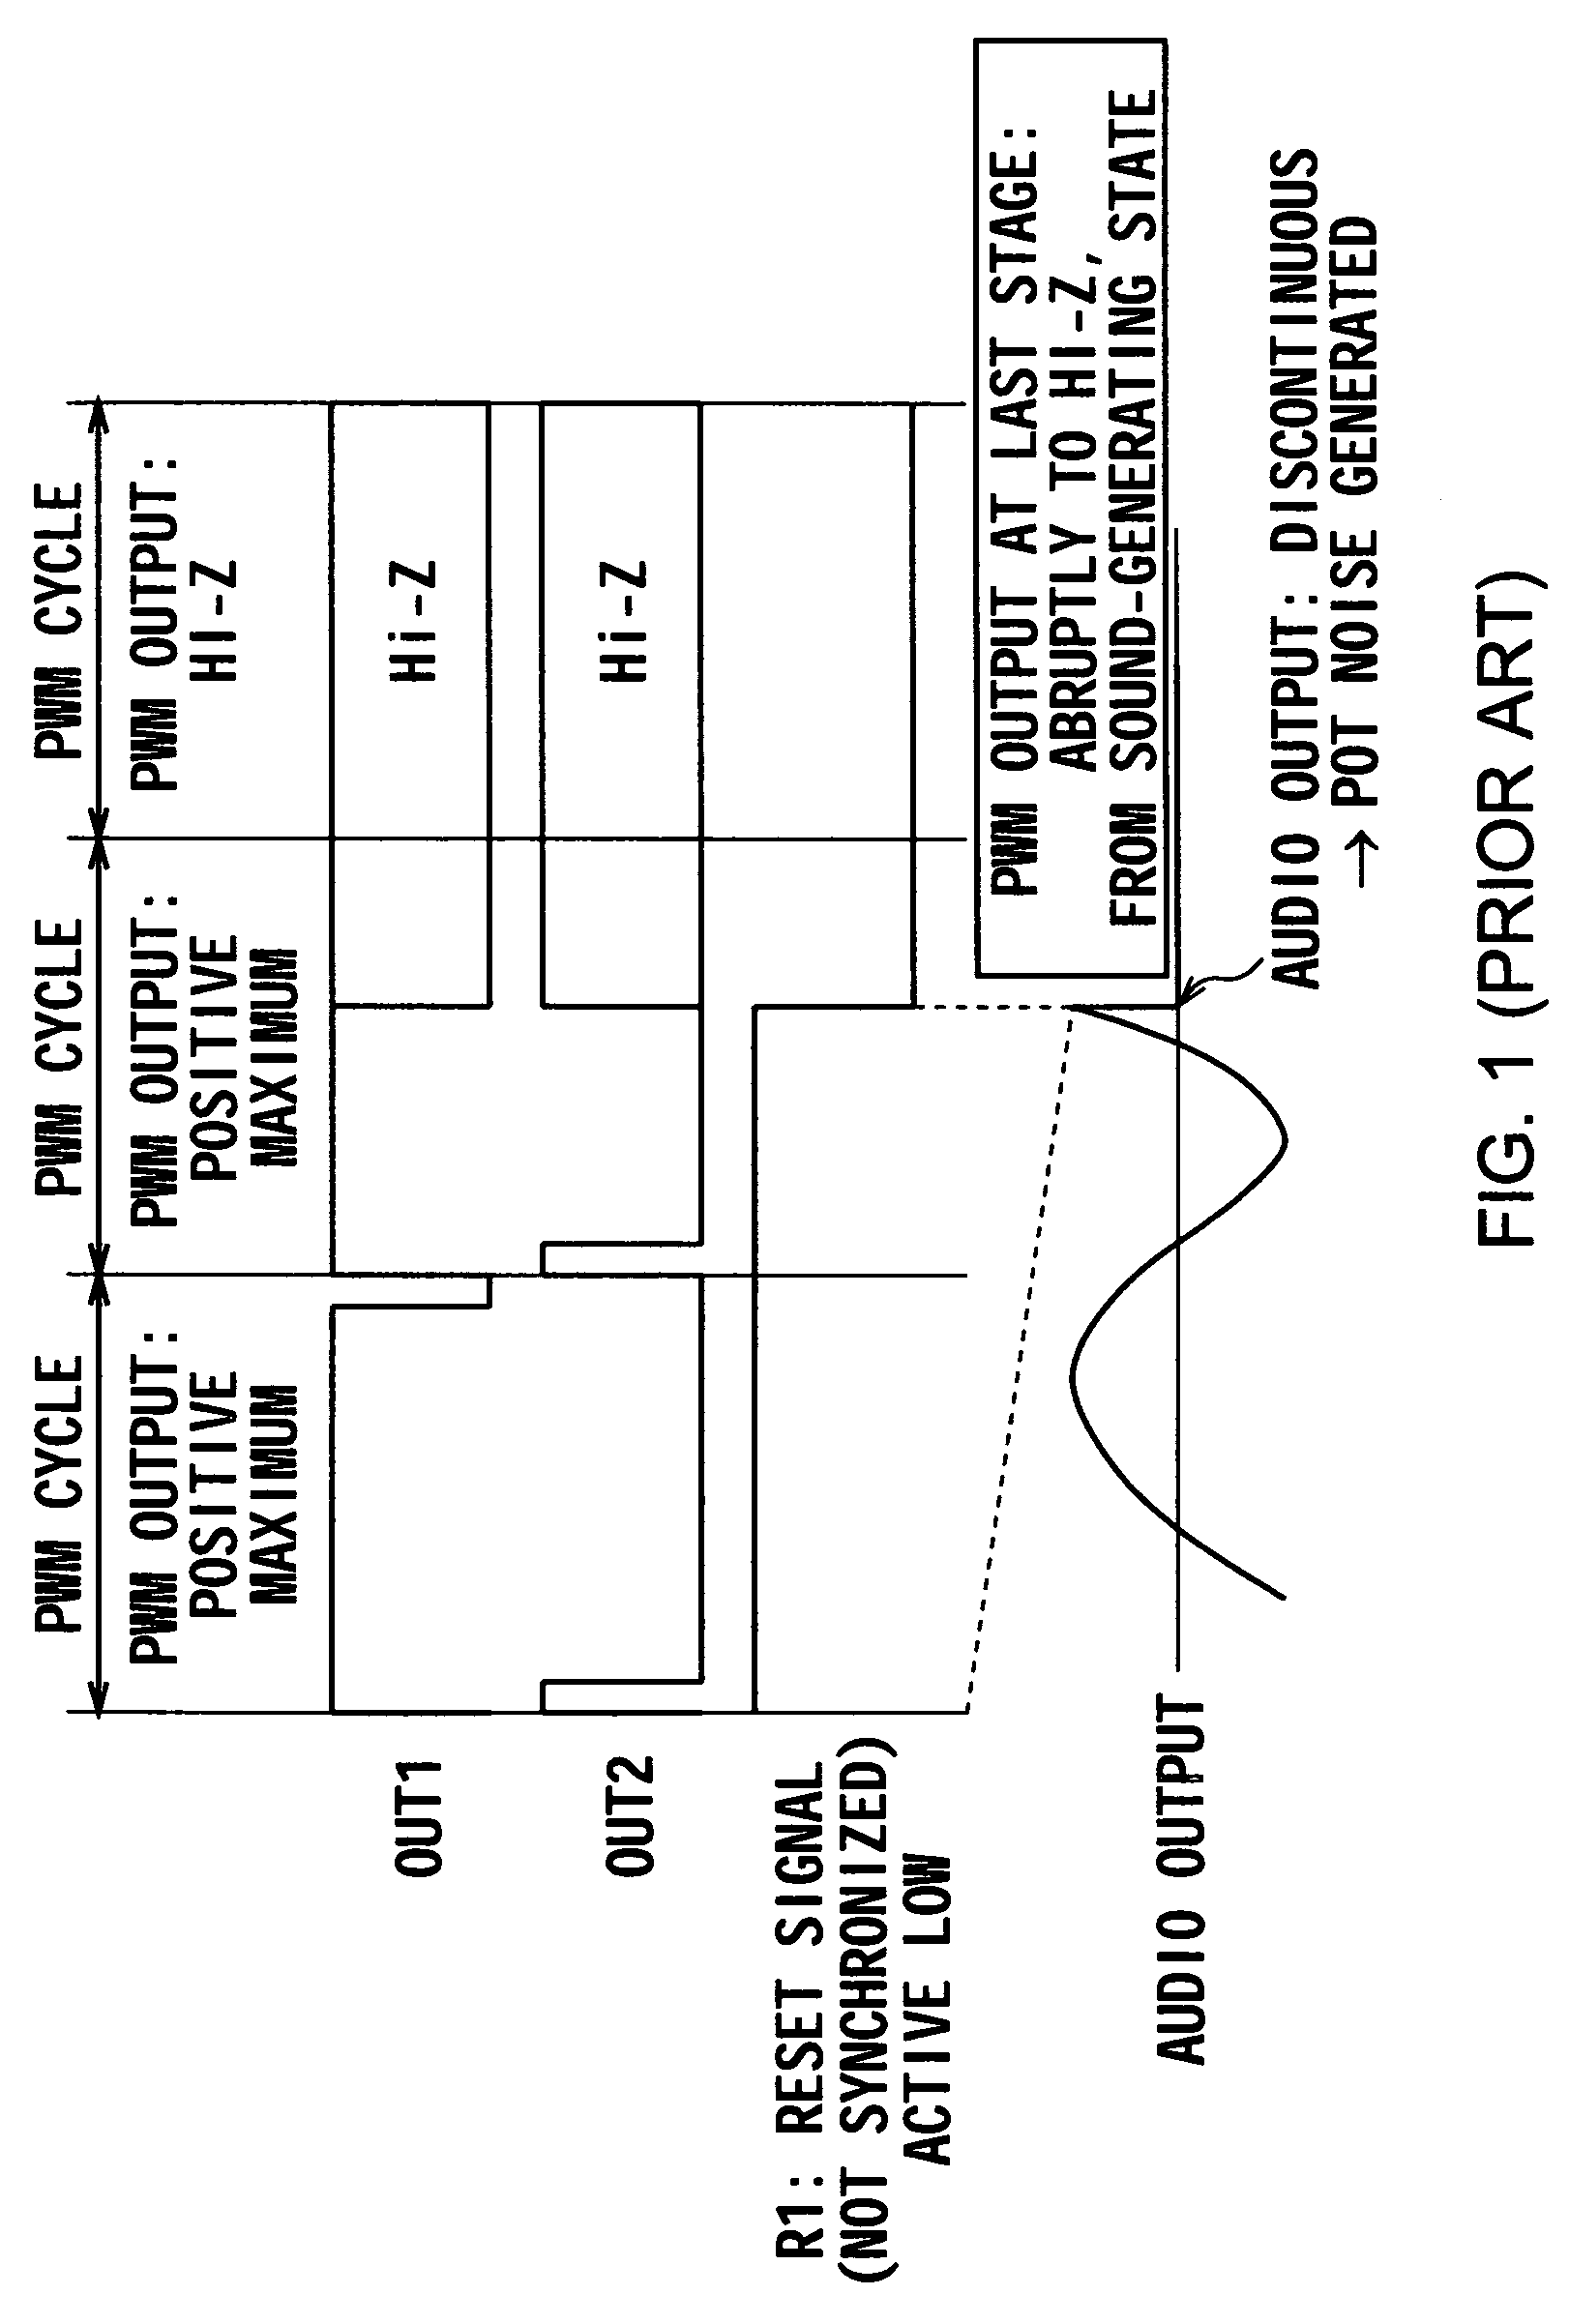 Digital amplifier apparatus and method of resetting a digital amplifier apparatus